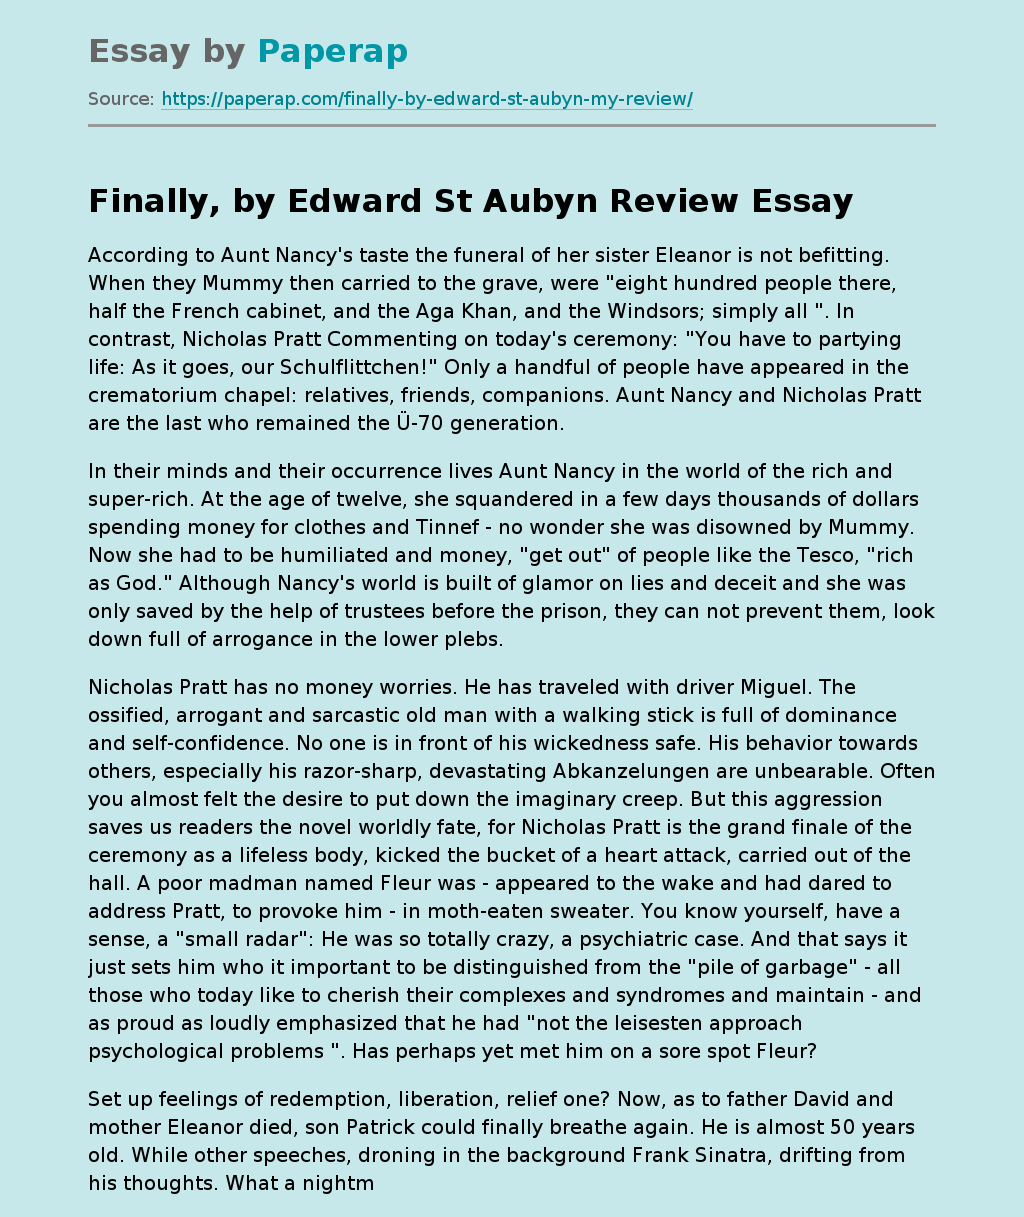 Finally, by Edward St Aubyn Review